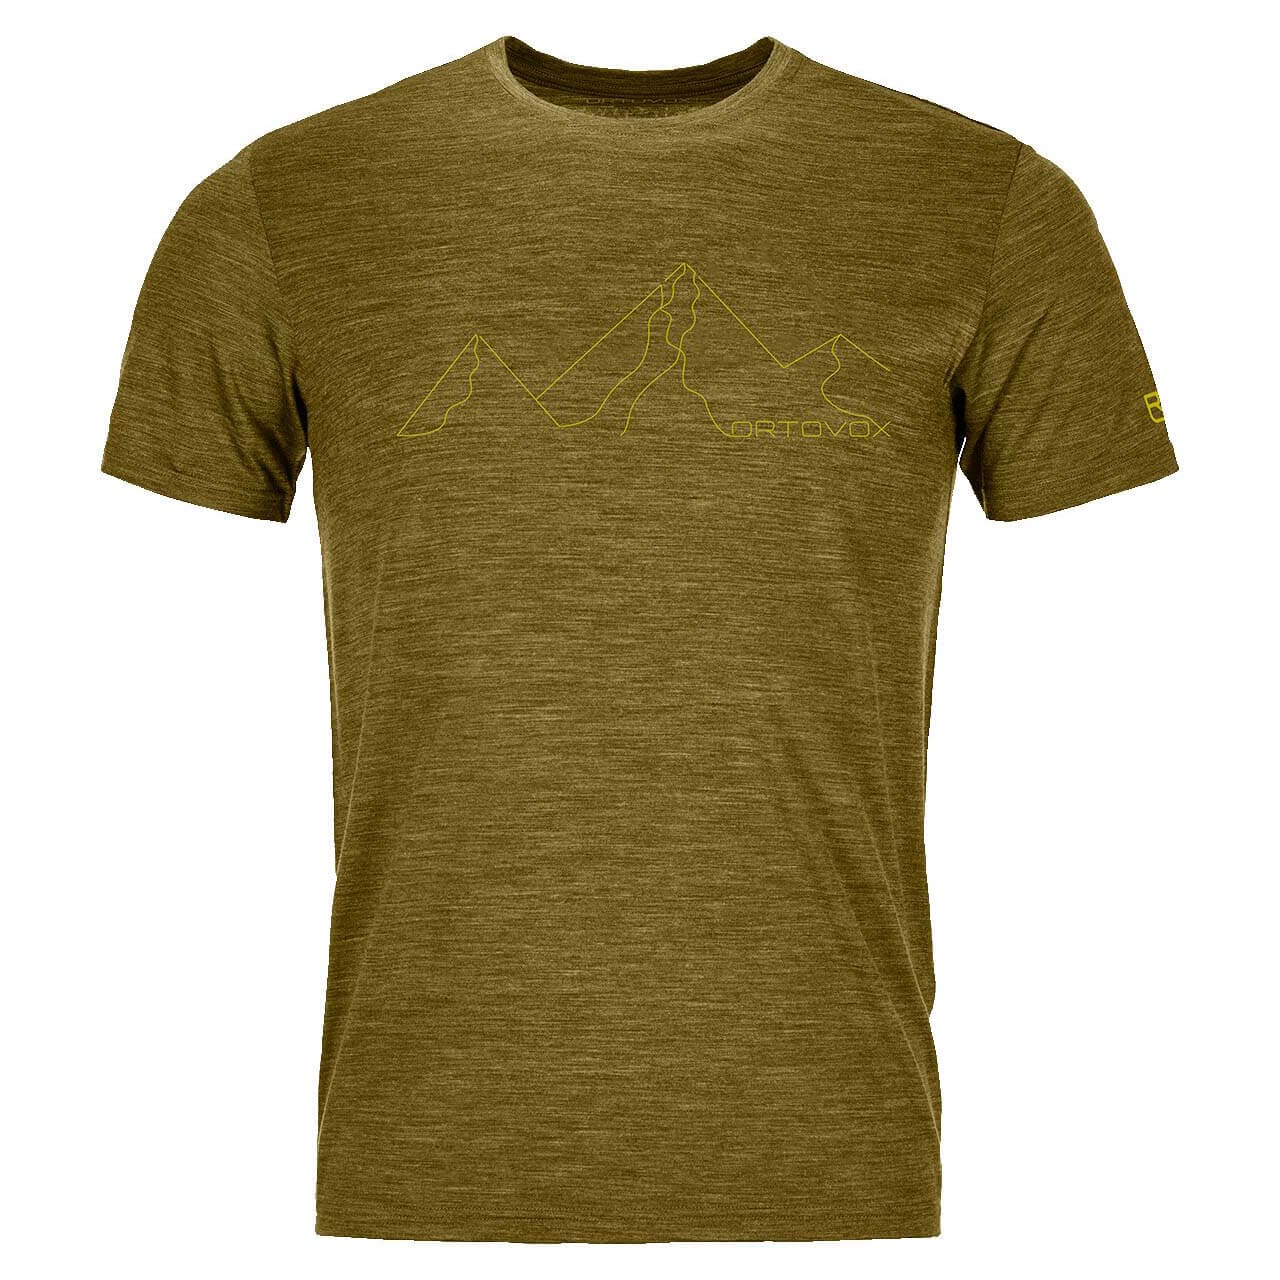 Ortovox Mountain T-Shirt 150 Cool - Green Moss Blend, L von Ortovox}